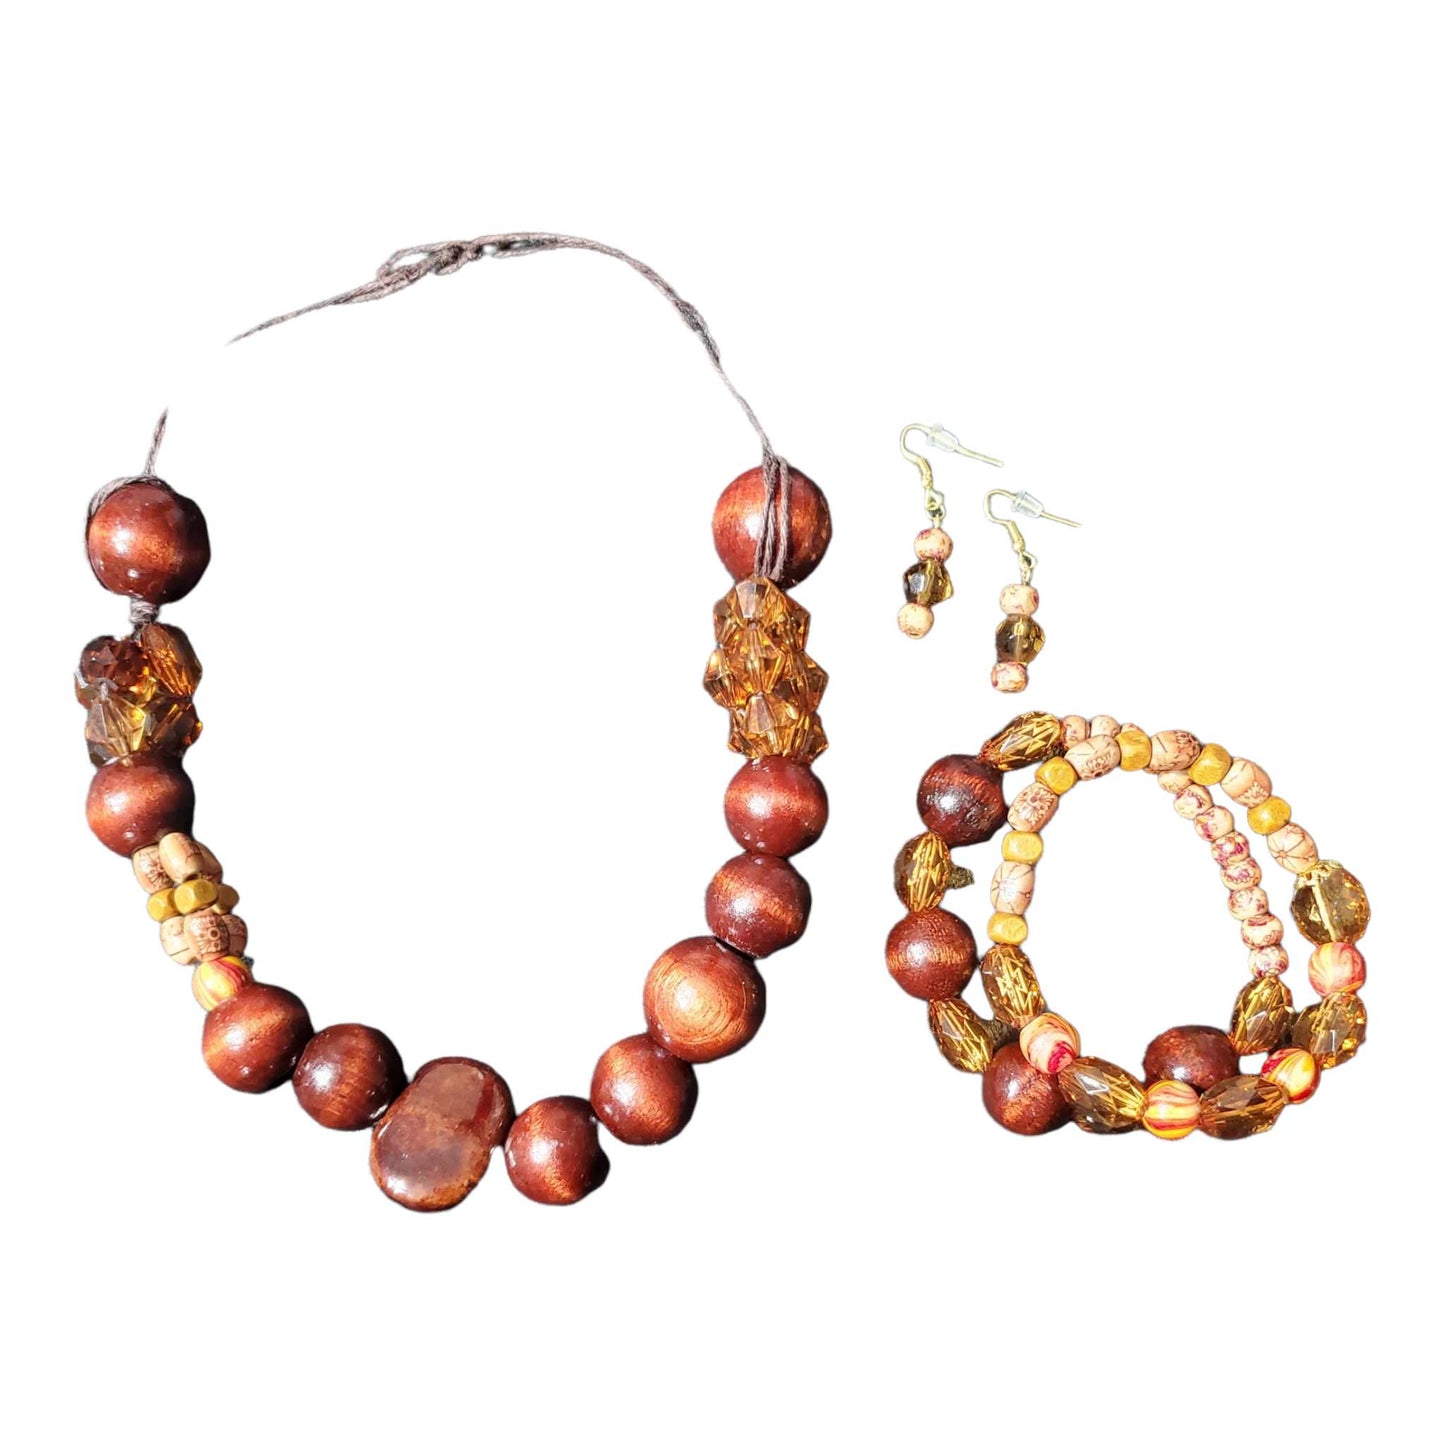 Wooden Bead Jewelry 4 Piece Set